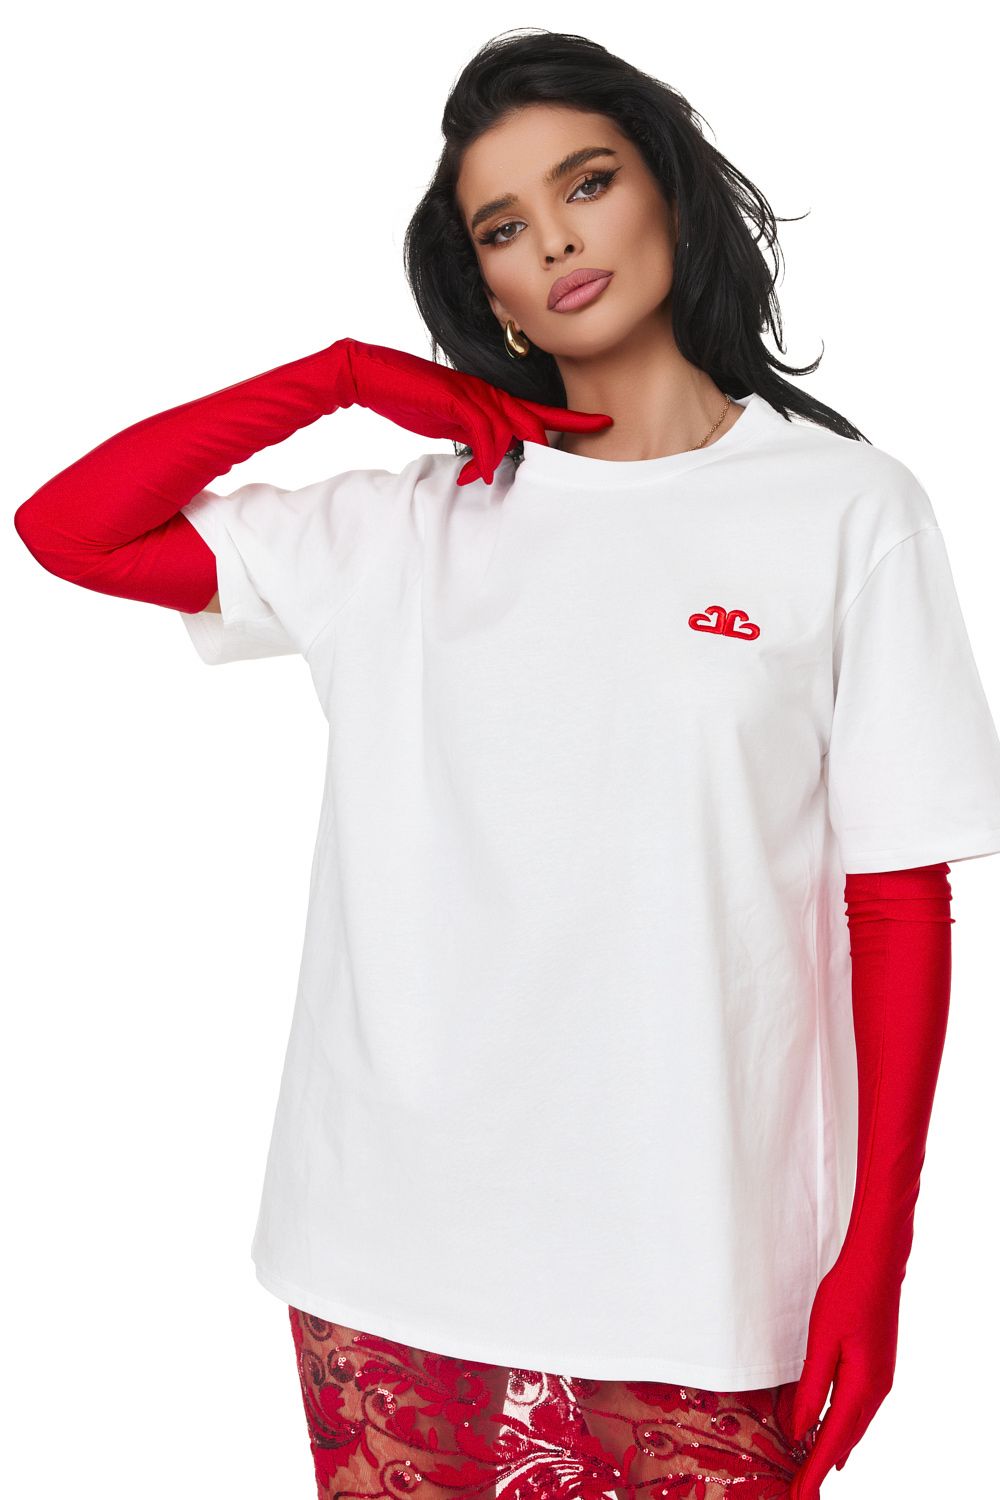 Cozila Bogas casual white ladies T-shirt